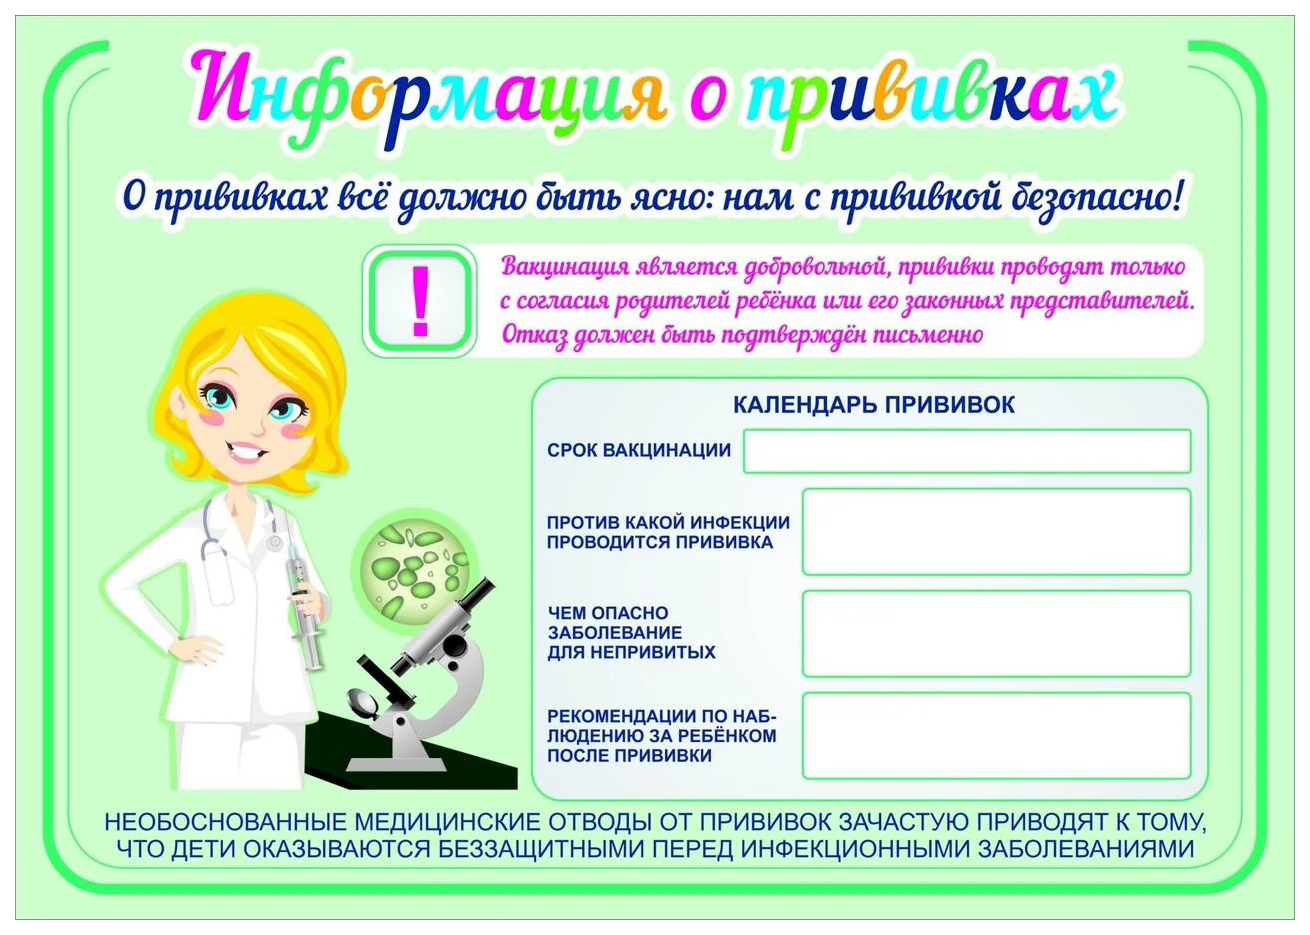 Комплект плакатов "Медицинский уголок": 4 плаката